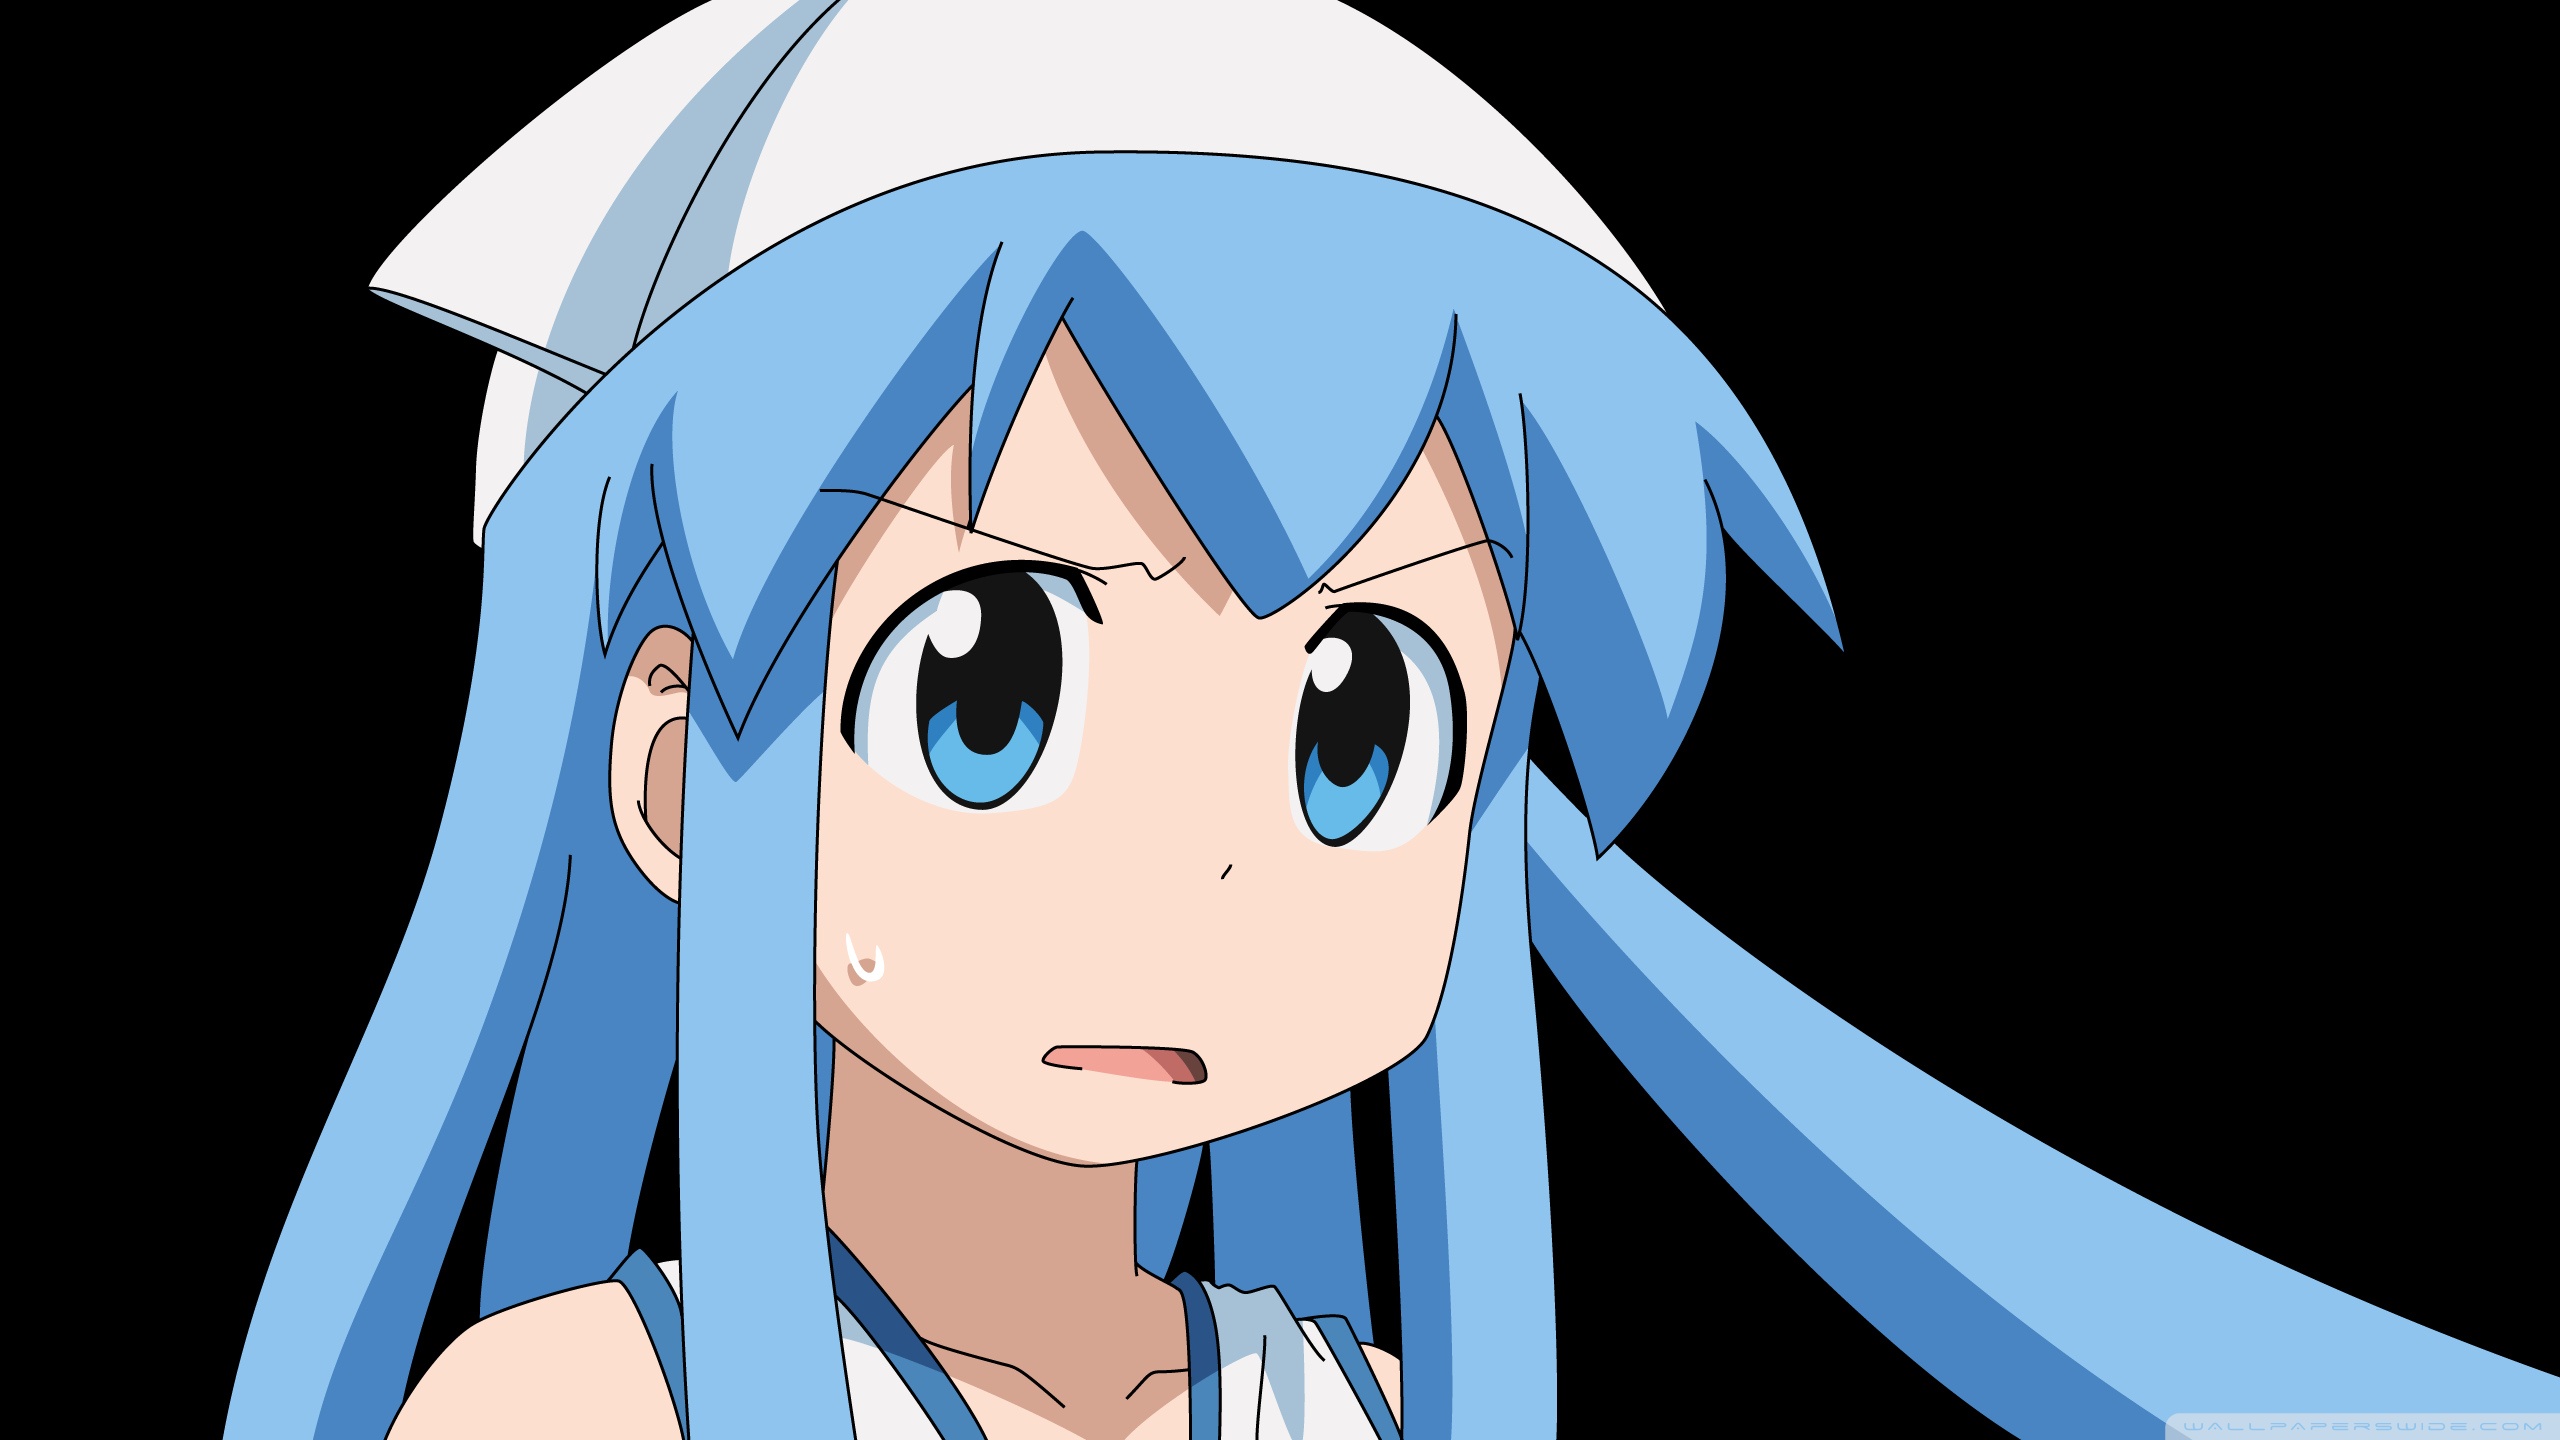 Anime Angry Girl With Blue Hair Ultra HD Desktop Background Wallpaper for 4K UHD TV, Widescreen & UltraWide Desktop & Laptop, Tablet